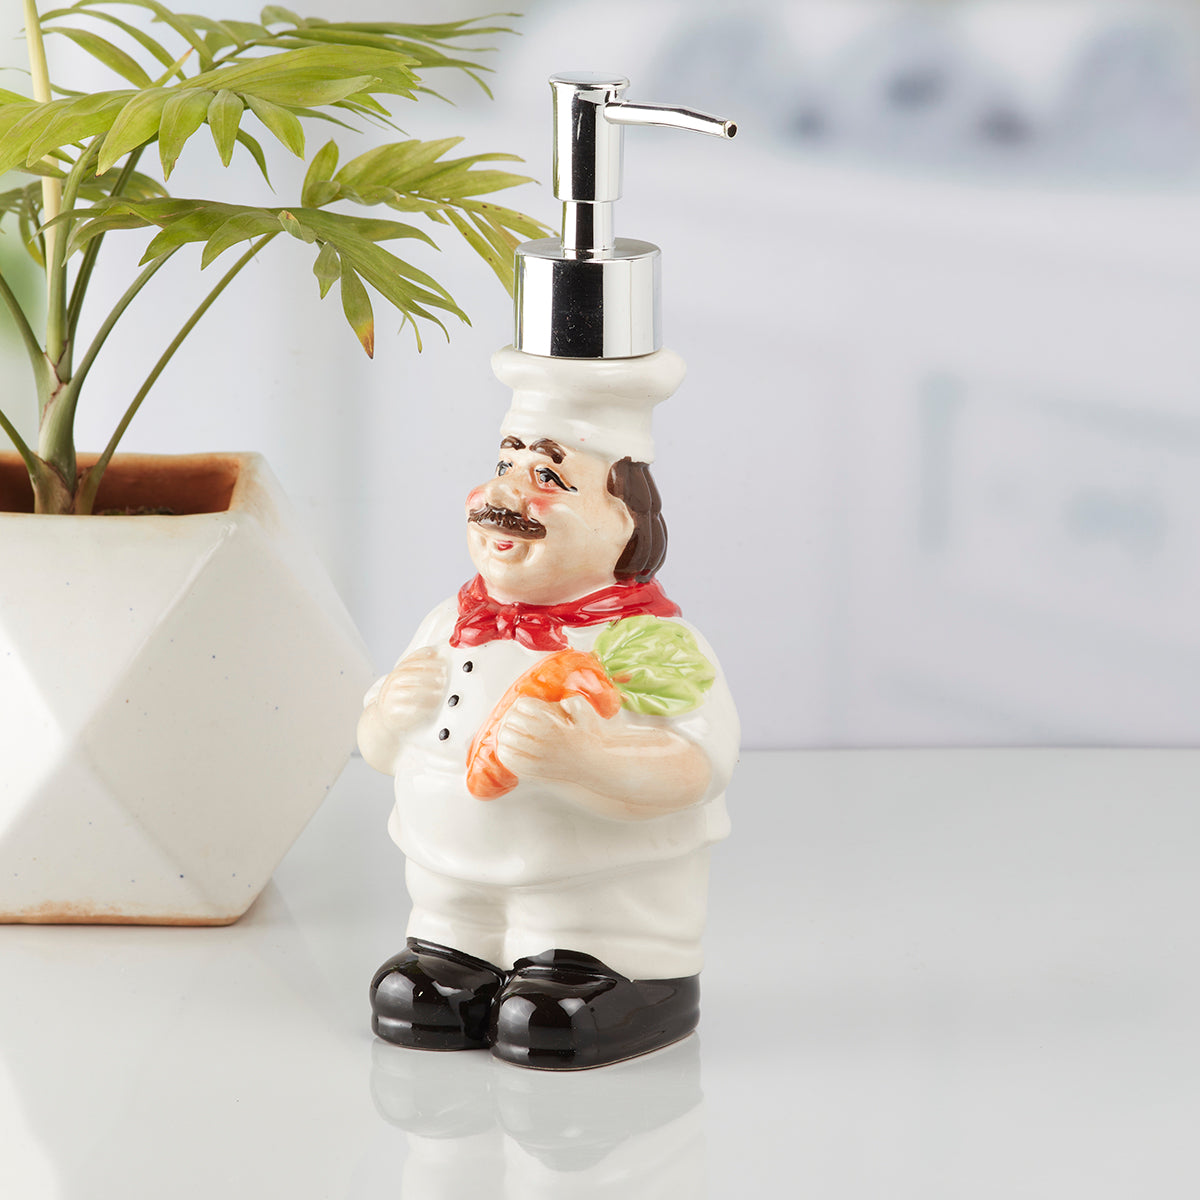 Ceramic Soap Dispenser Pump for Bathroom for Bath Gel, Lotion, Shampoo (10145)